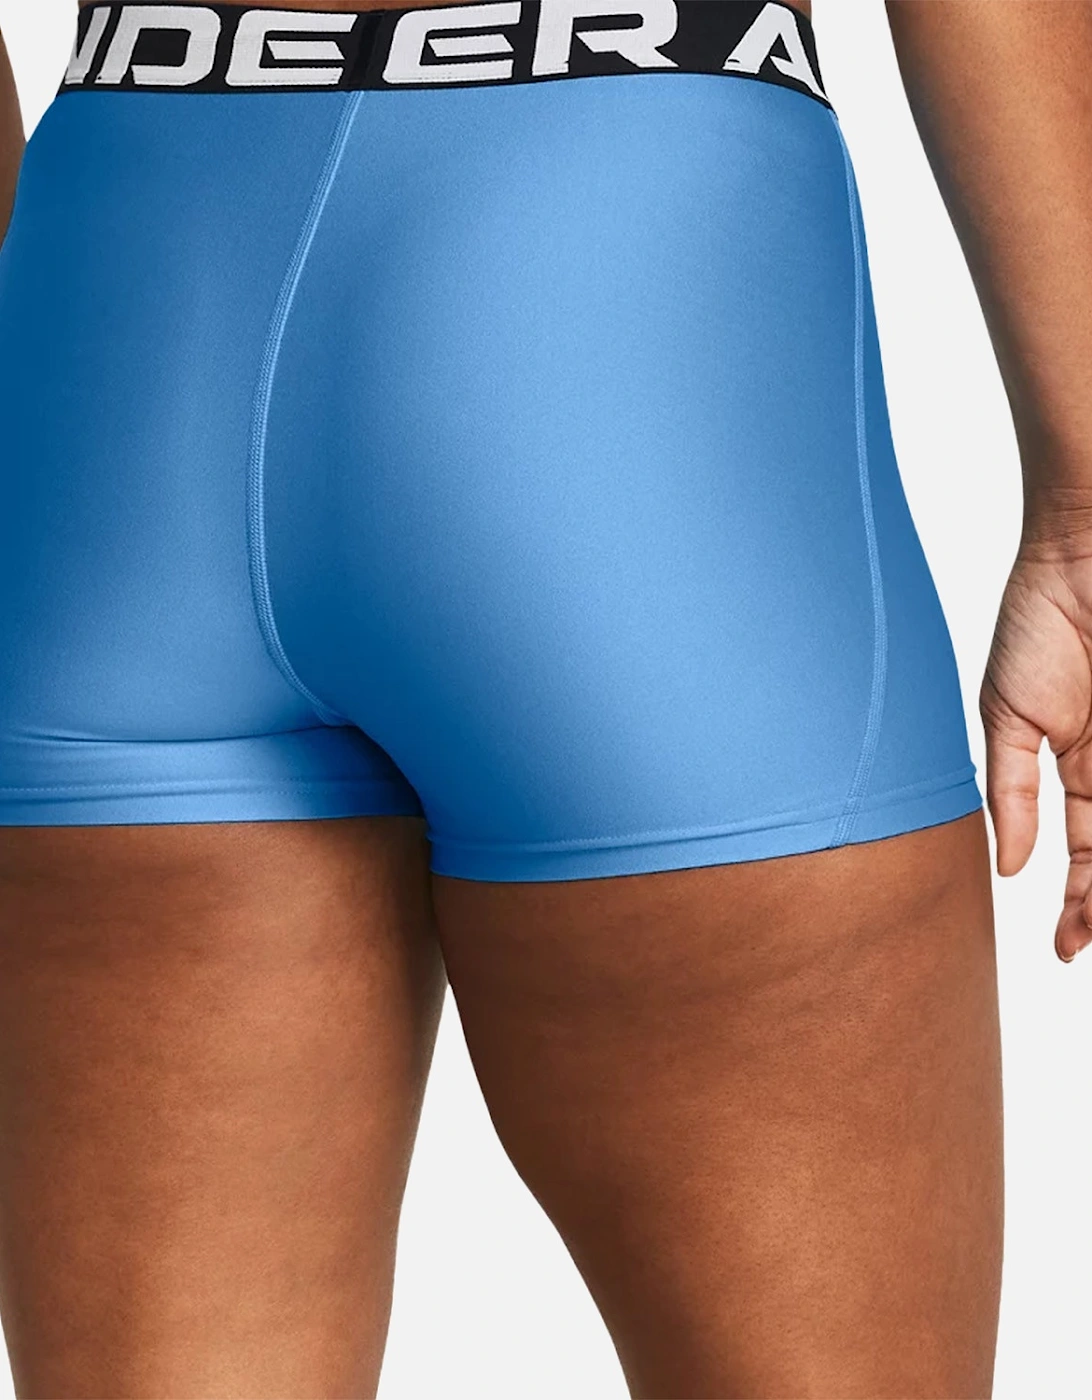 Womens Heat Gear Shorts (Blue)